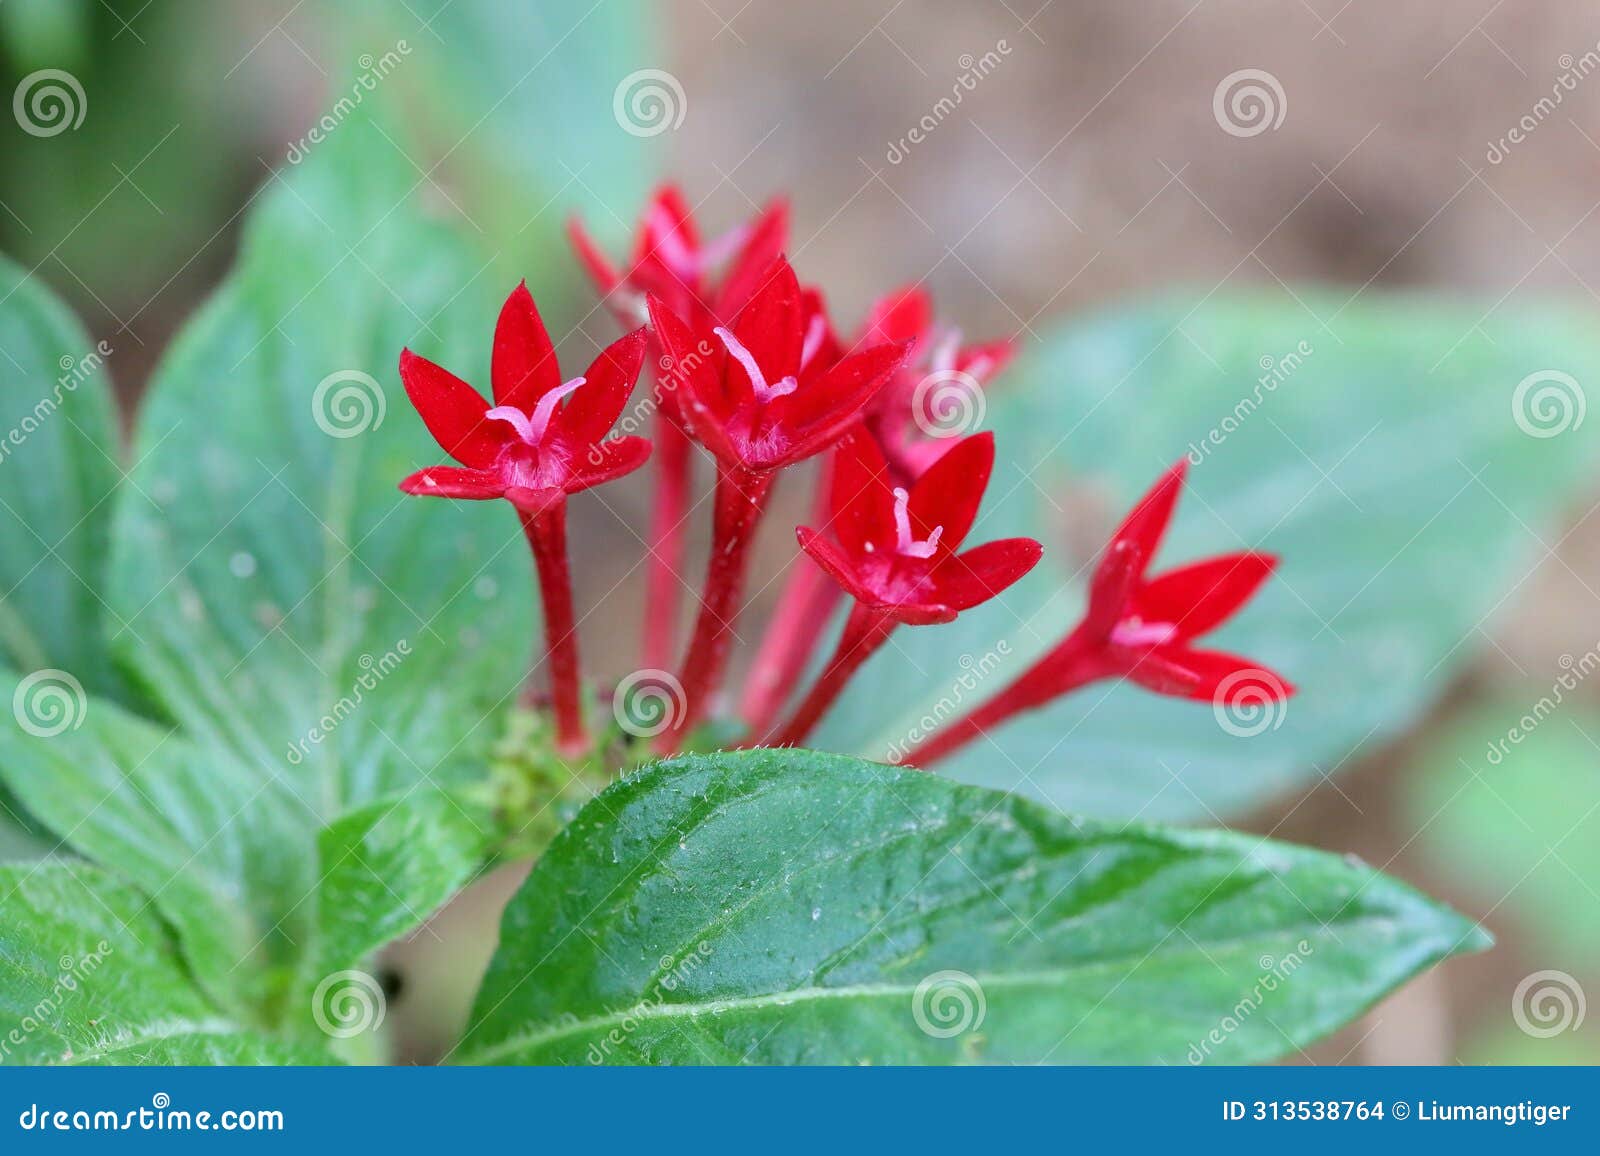 pentas lanceolata (forssk.) k. schum. flowers